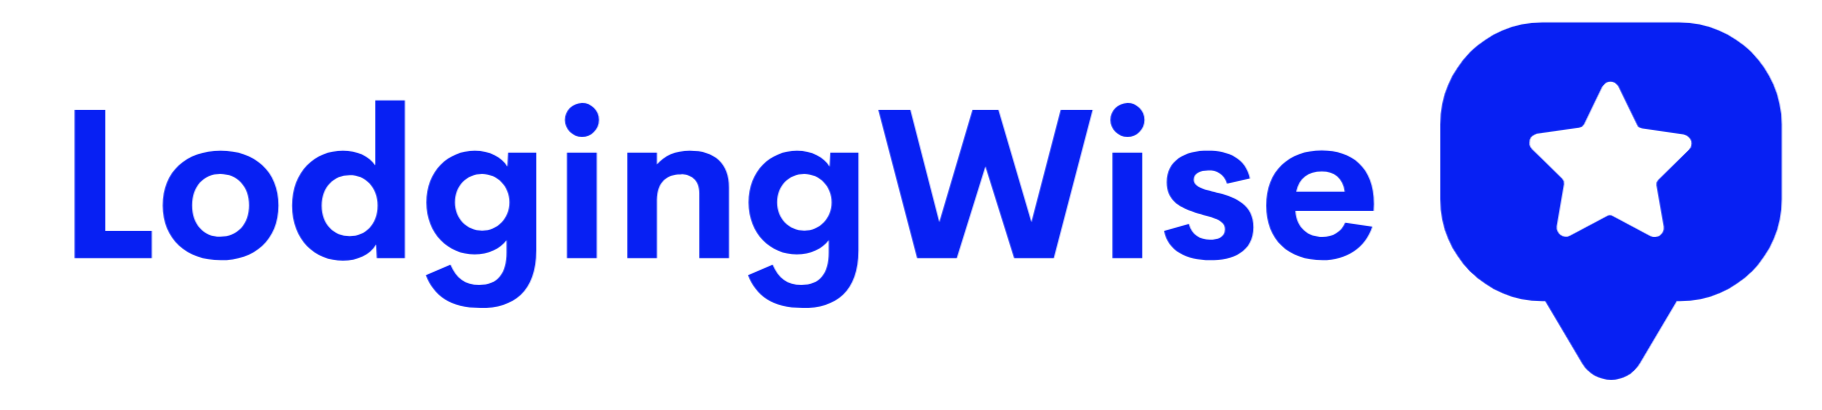 LodgingWise Logo for ADA compliance